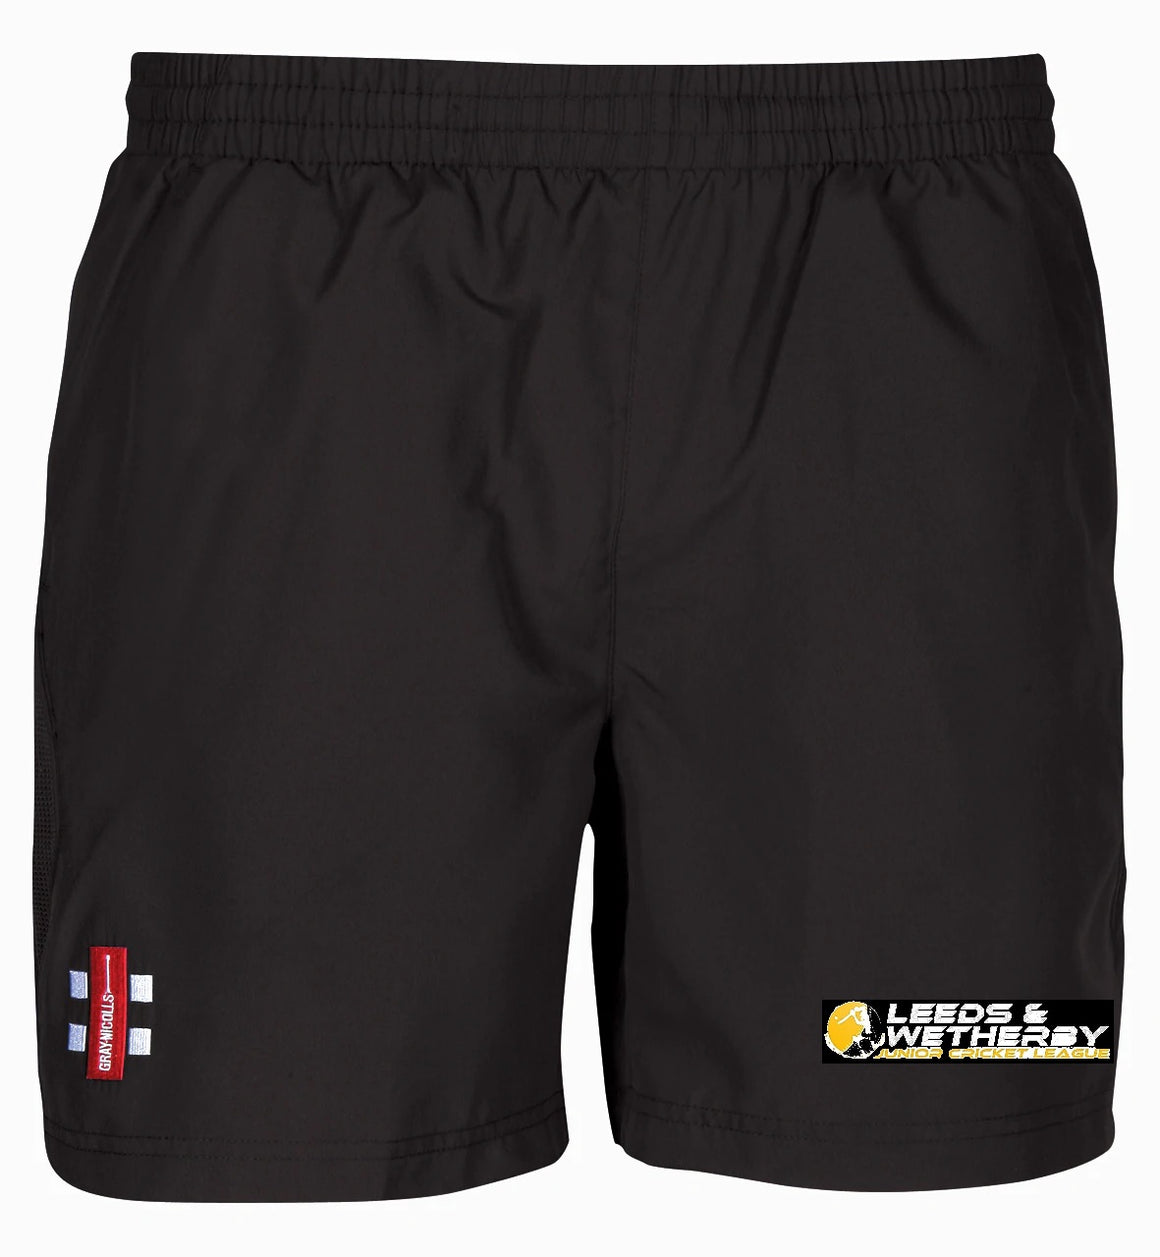 LWJCL Training Shorts